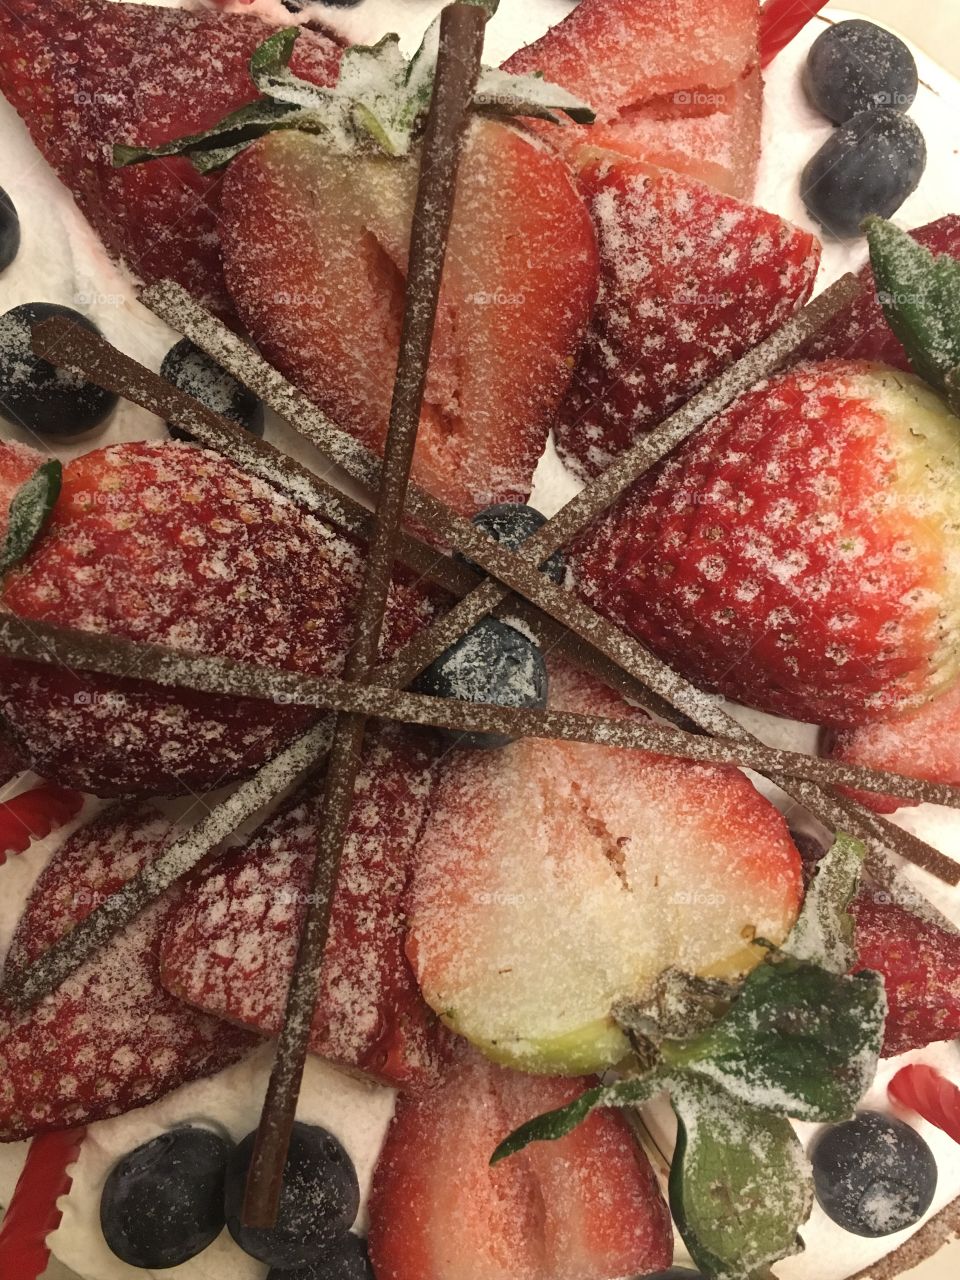 Strawberry Chocolate Dessert